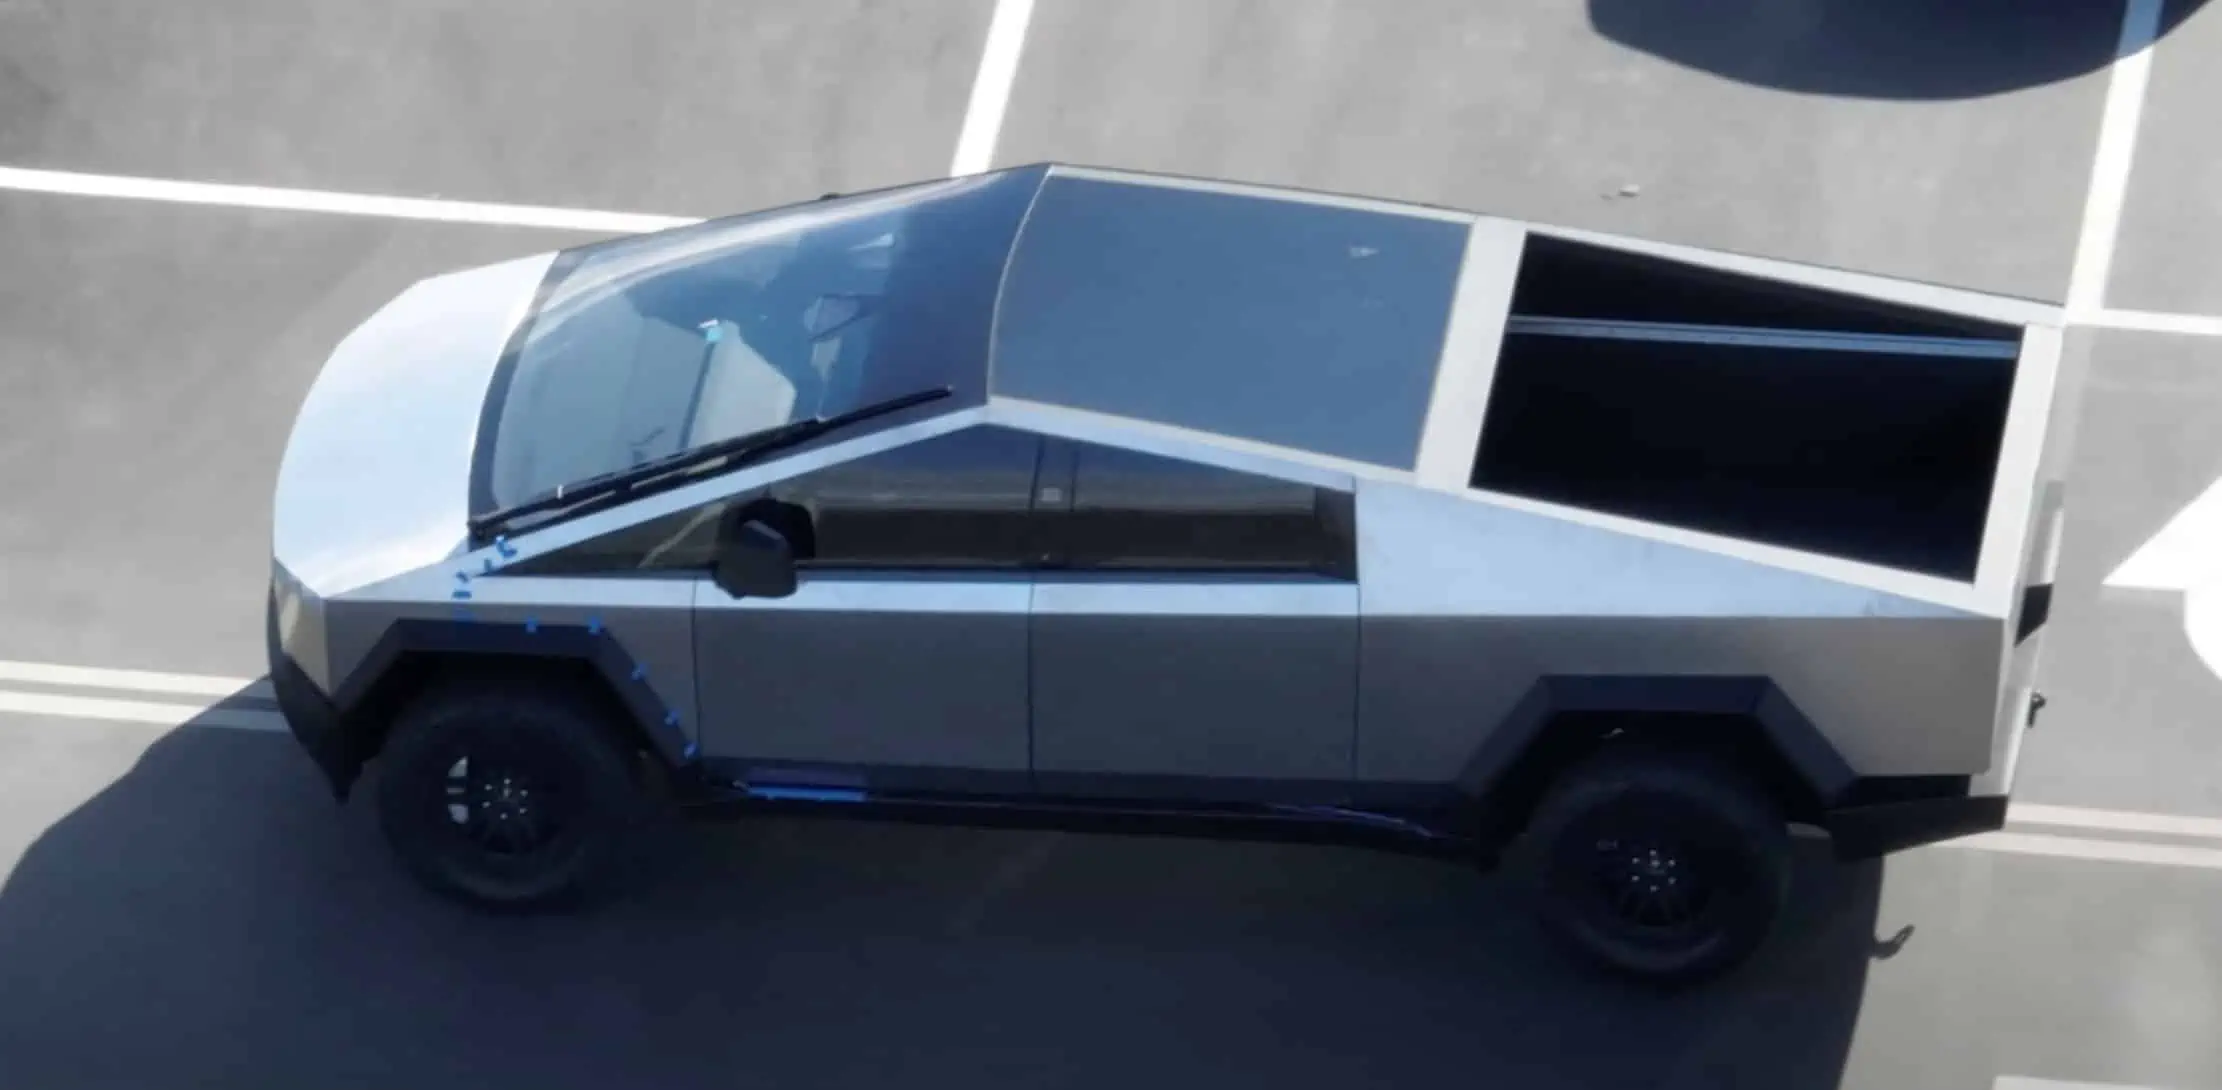 New Tesla CyberTruck prototype more realistic, less cool (video)